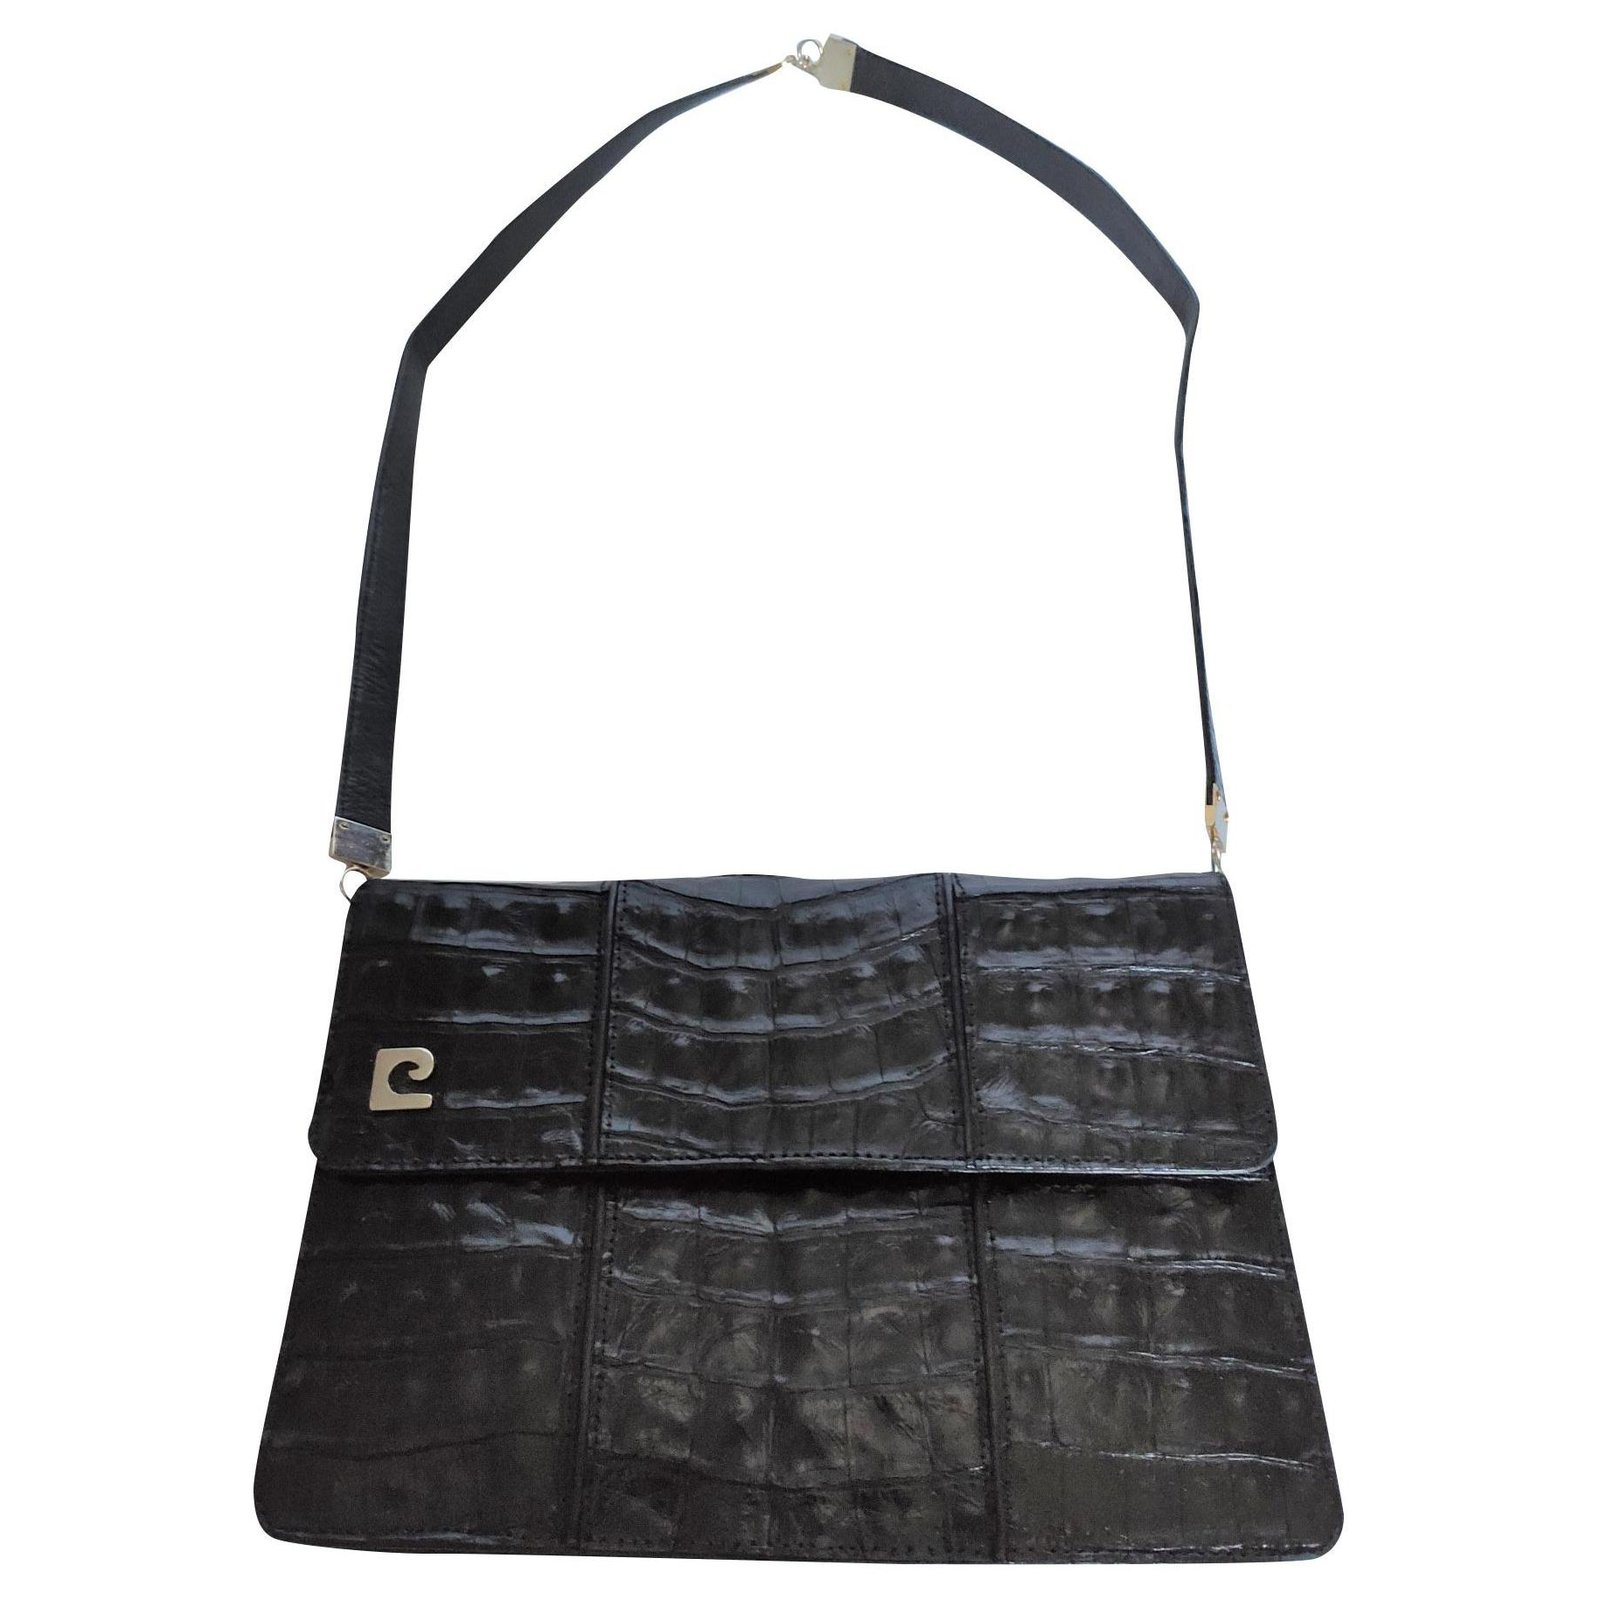 Buy Pierre Cardin Women's Beech Satchel Bag | Ladies Purse Handbag for  Women and Girls - PCH0824NAVY at Amazon.in